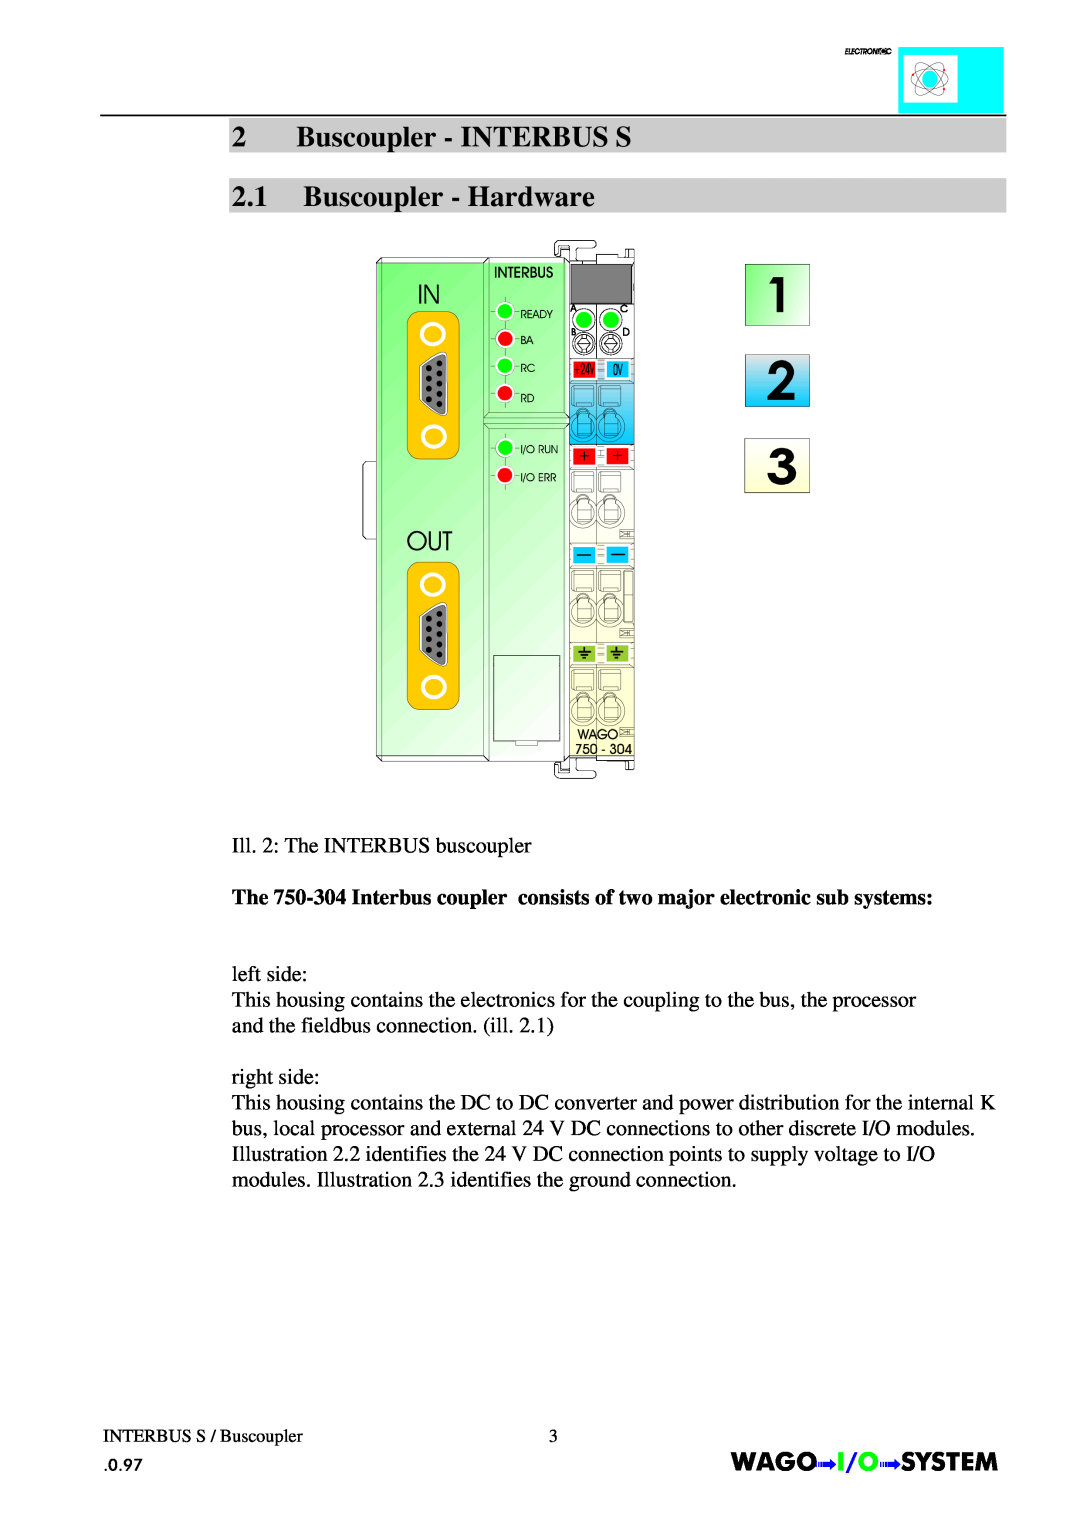 Quatech manual Buscoupler - INTERBUS S 2.1 Buscoupler - Hardware 